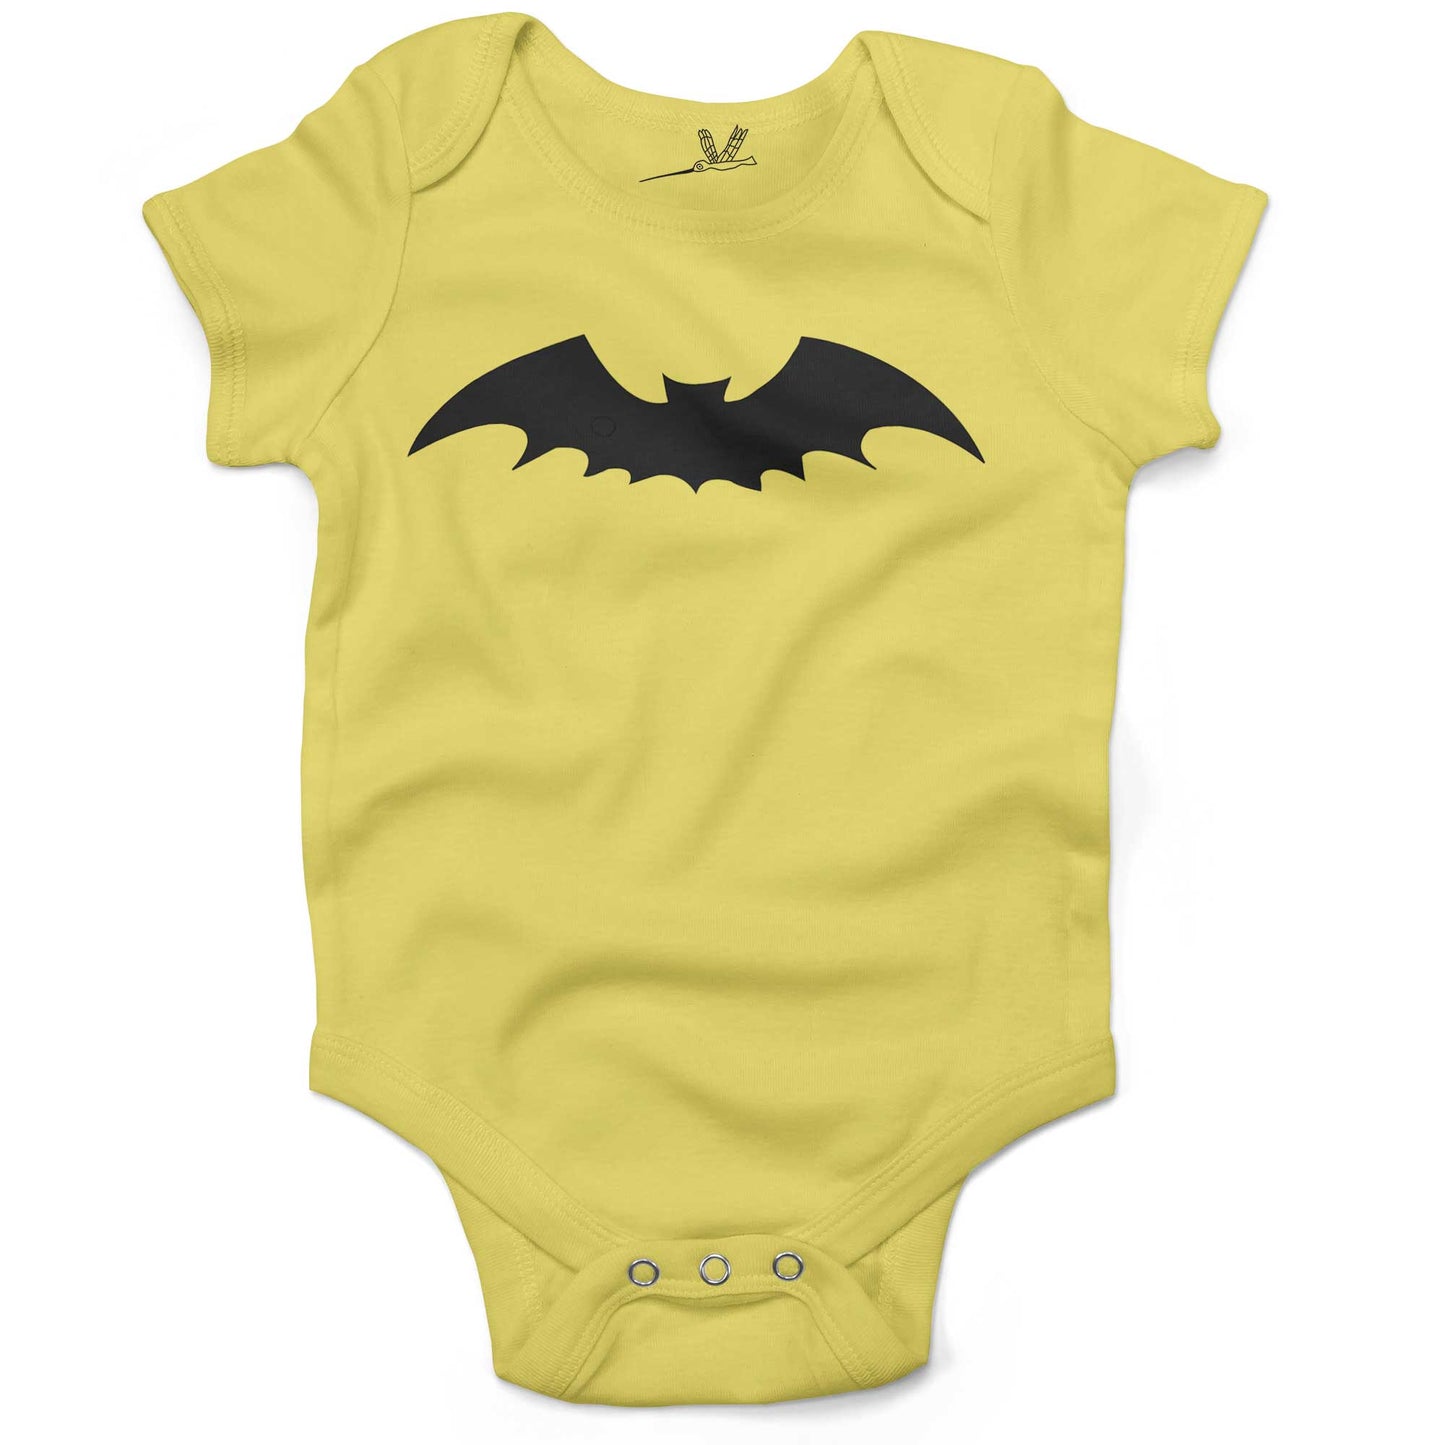 Gothic Bat Infant Bodysuit or Raglan Tee-Yellow-3-6 months